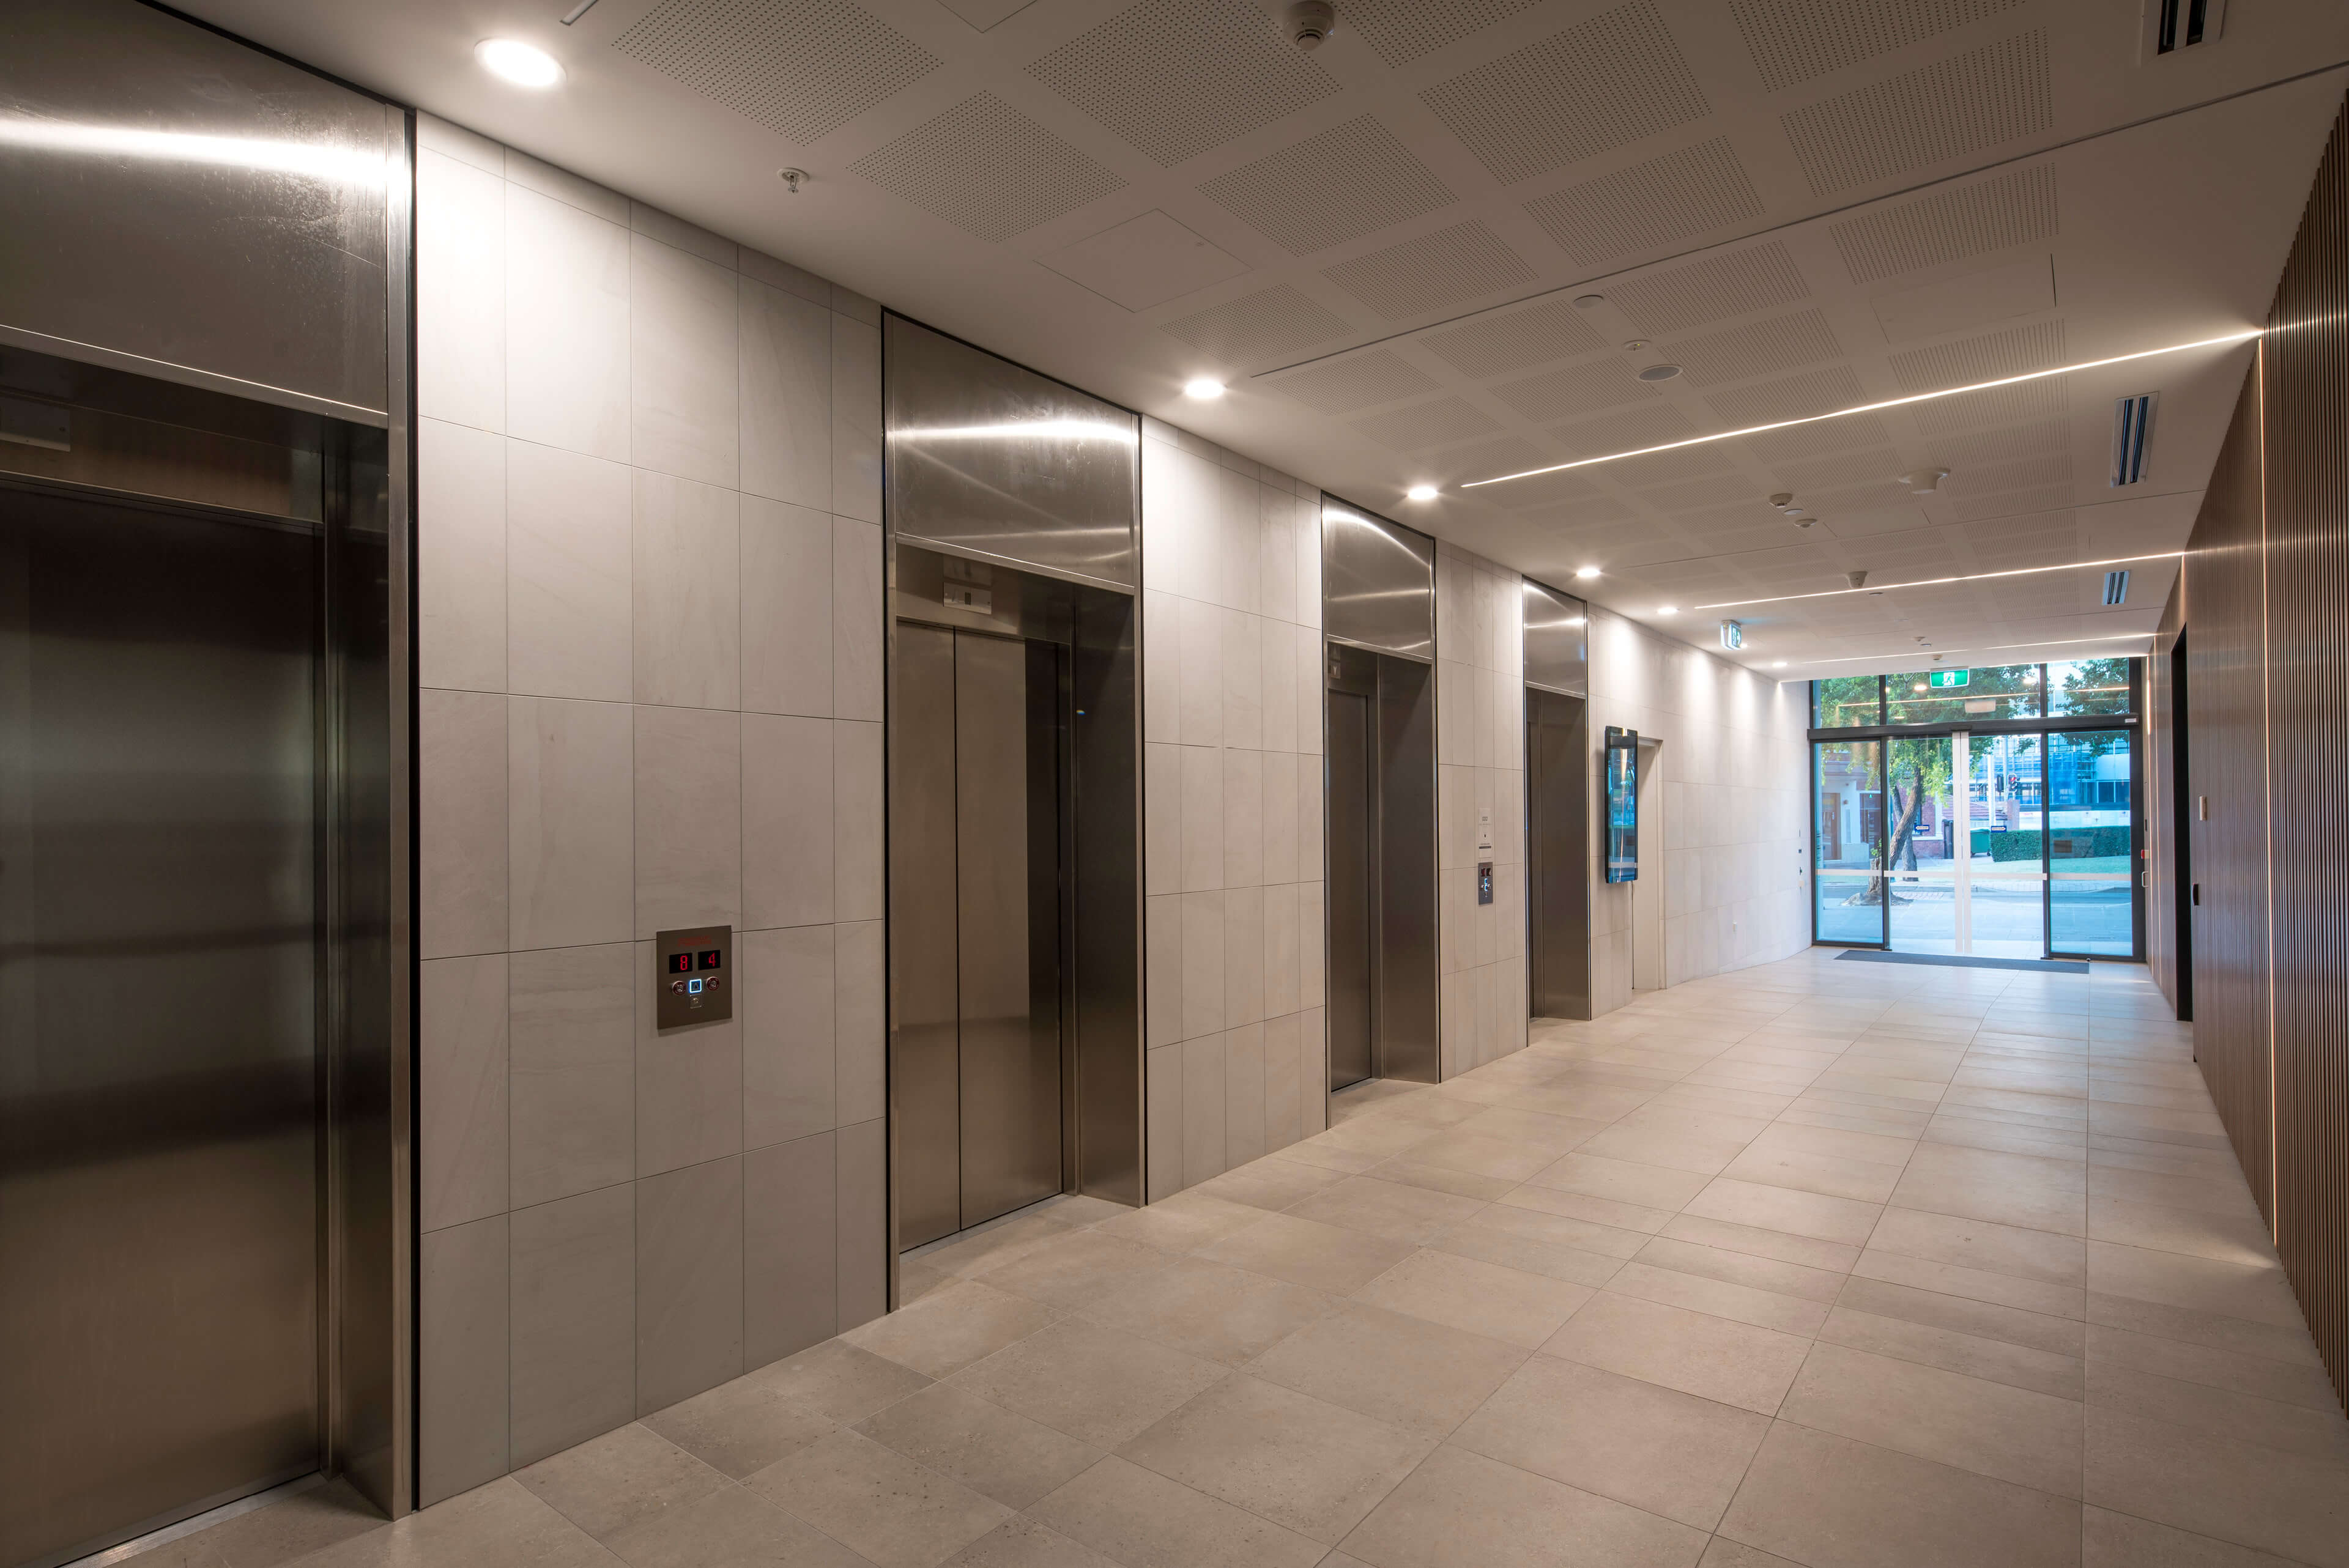 5 interior elevator scott street liverpool taylor construction commercial